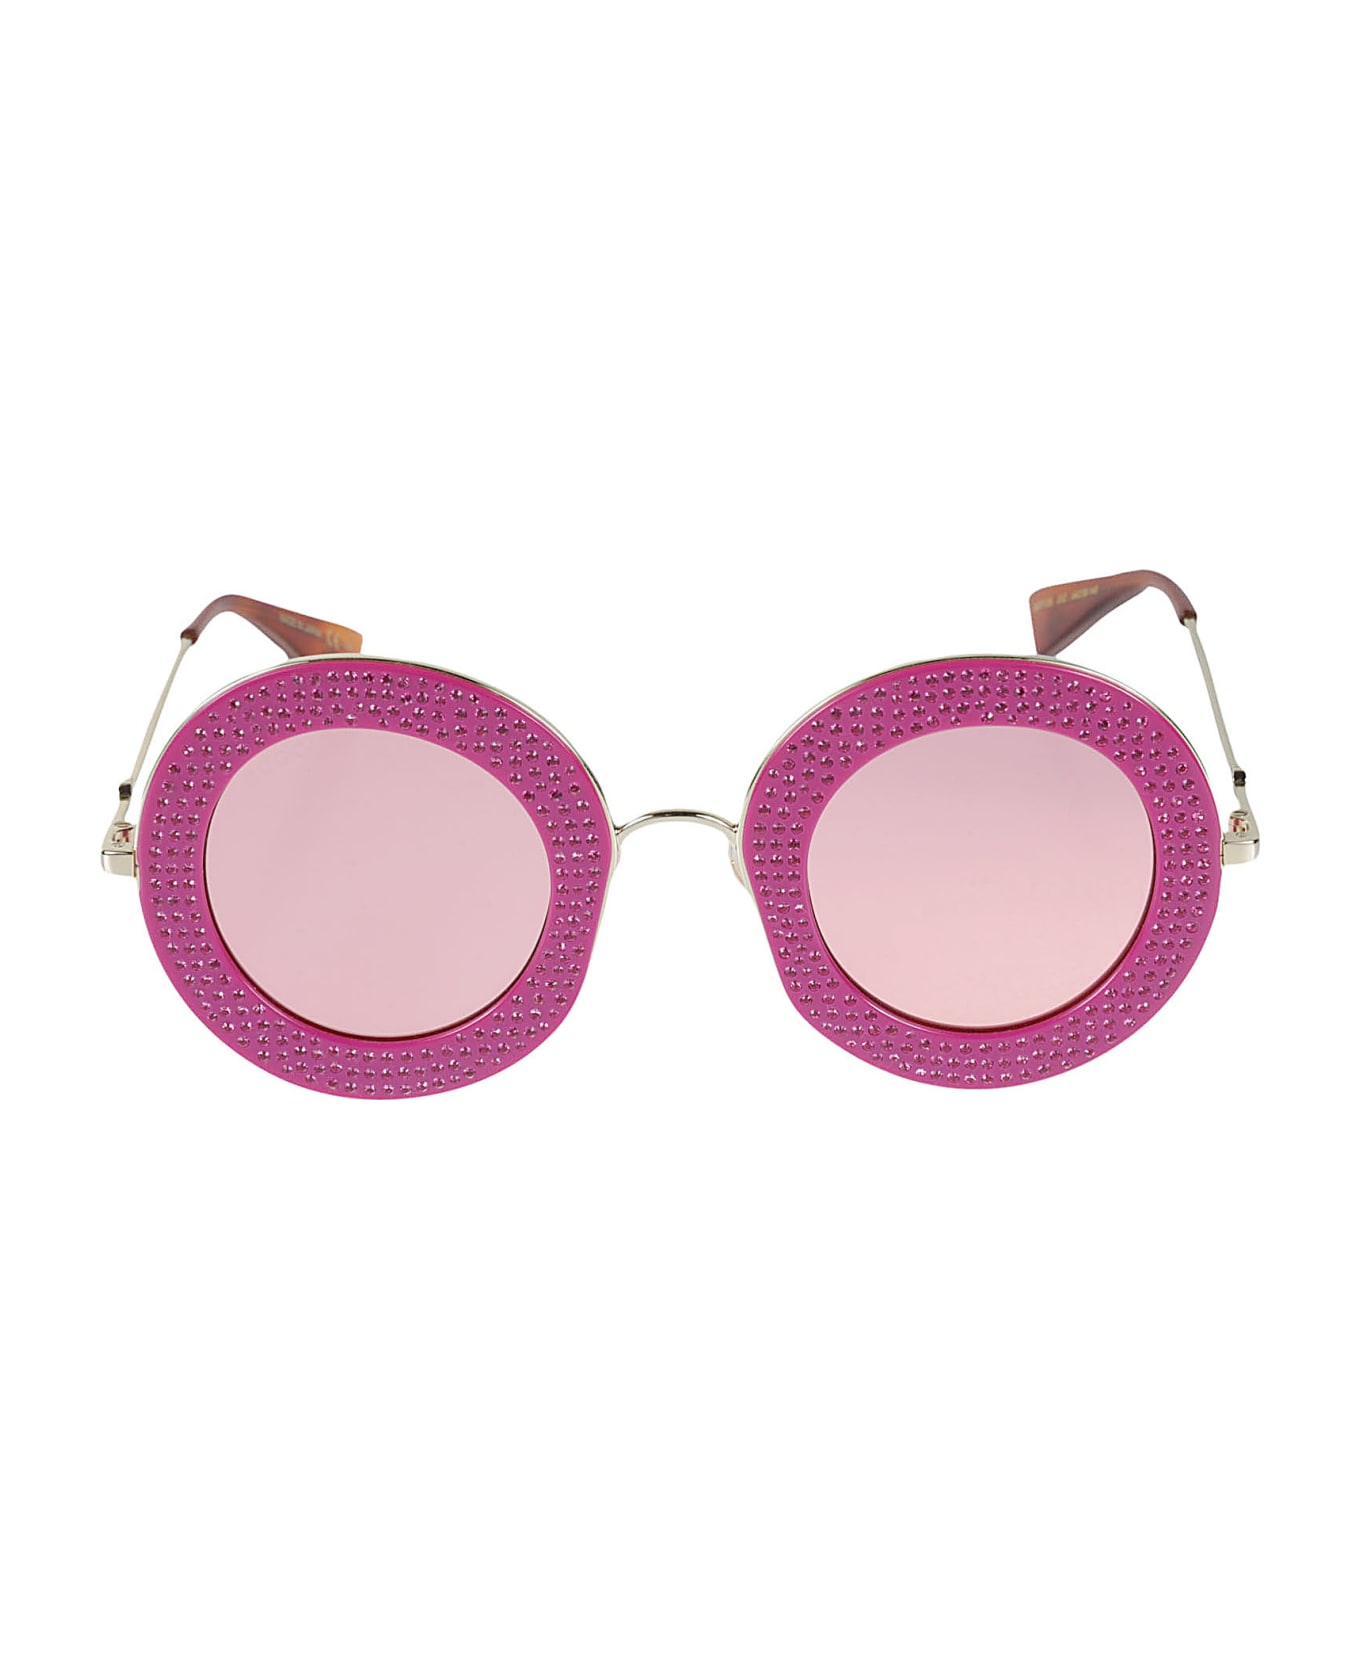 Gucci Eyewear Embellished Round Sunglasses - 012 fuchsia gold pink